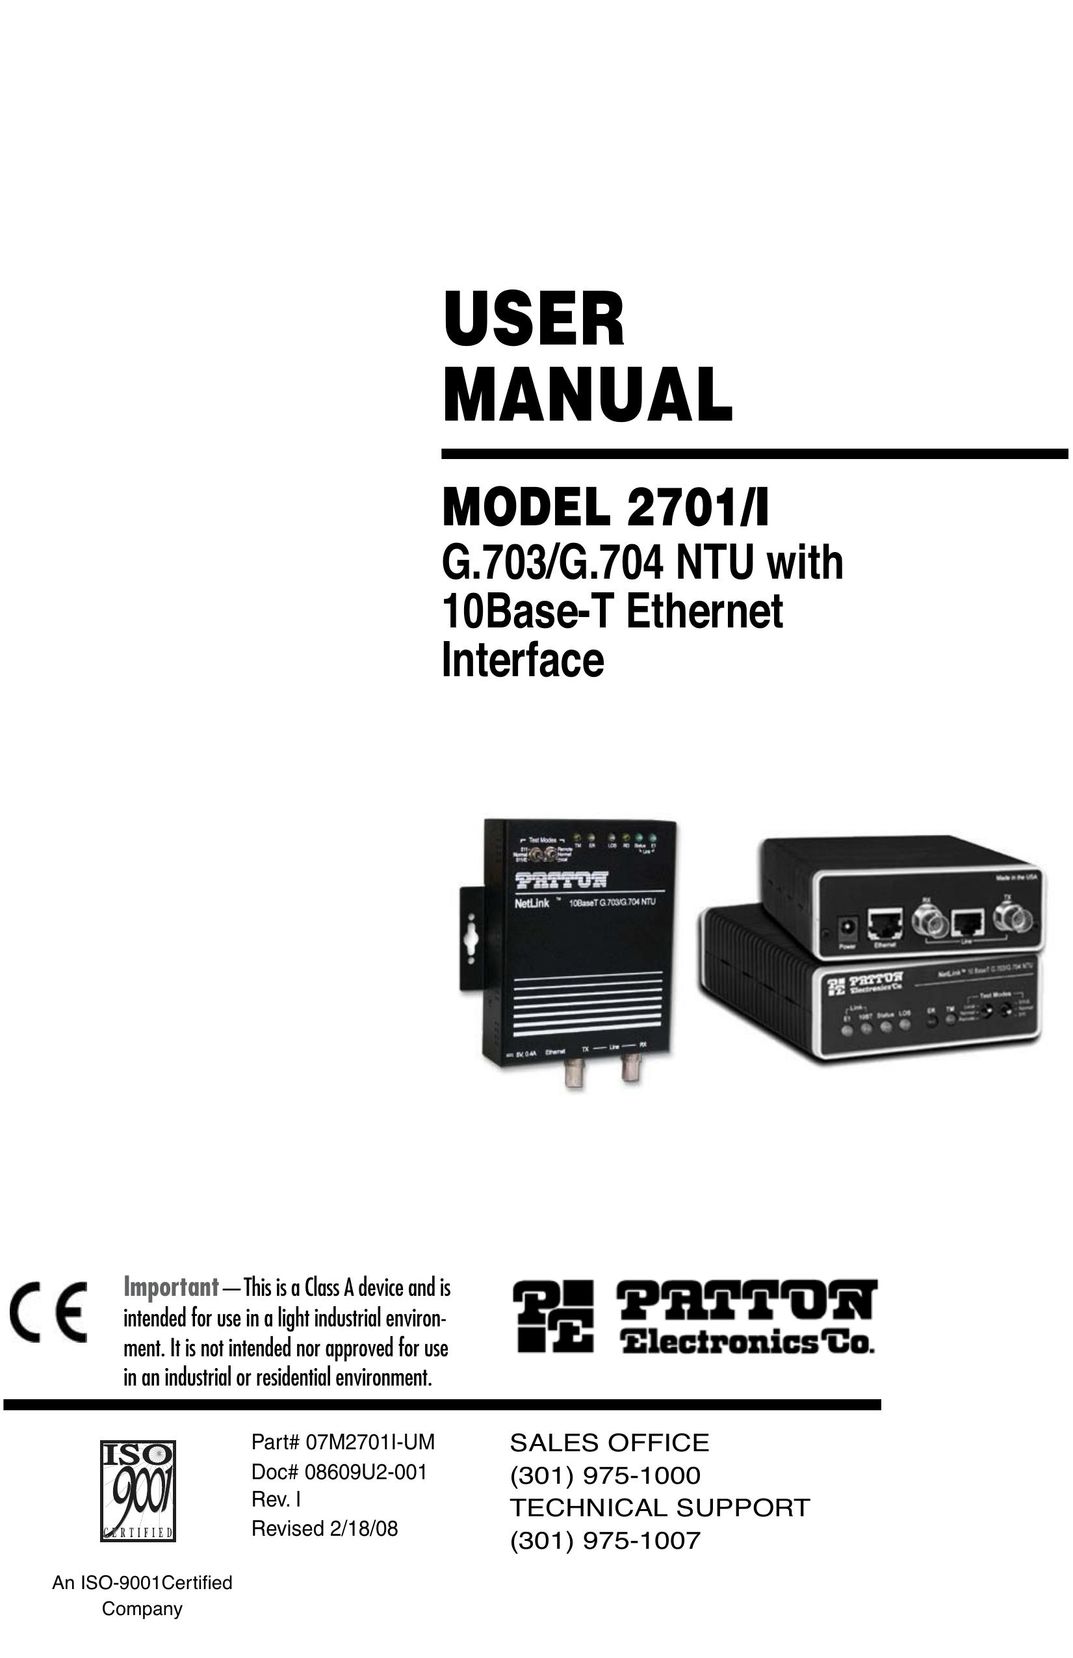 Patton electronic 2701/I Switch User Manual